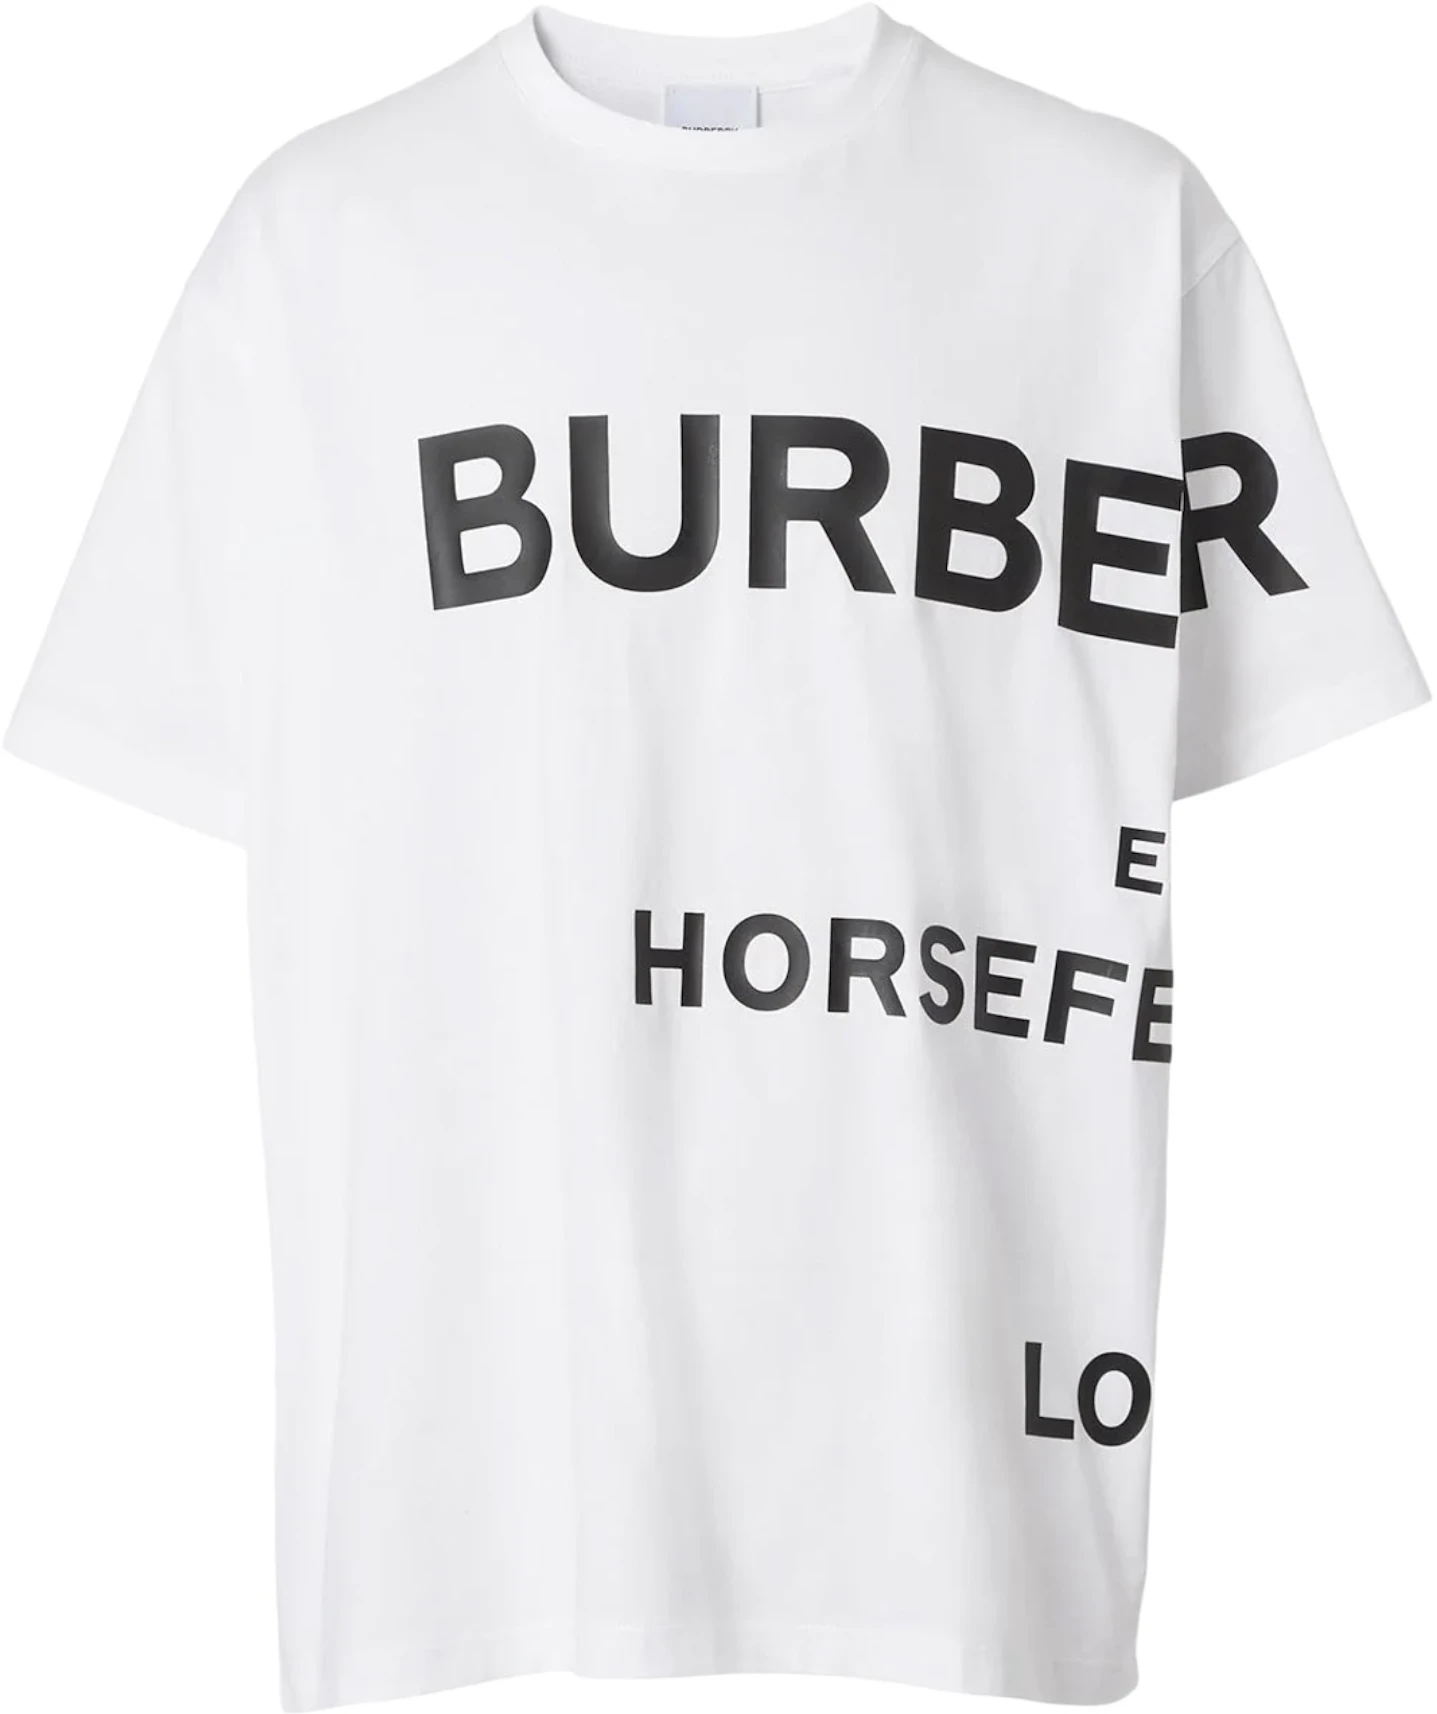 Burberry Horseferry-Print T-shirt White/Black - US